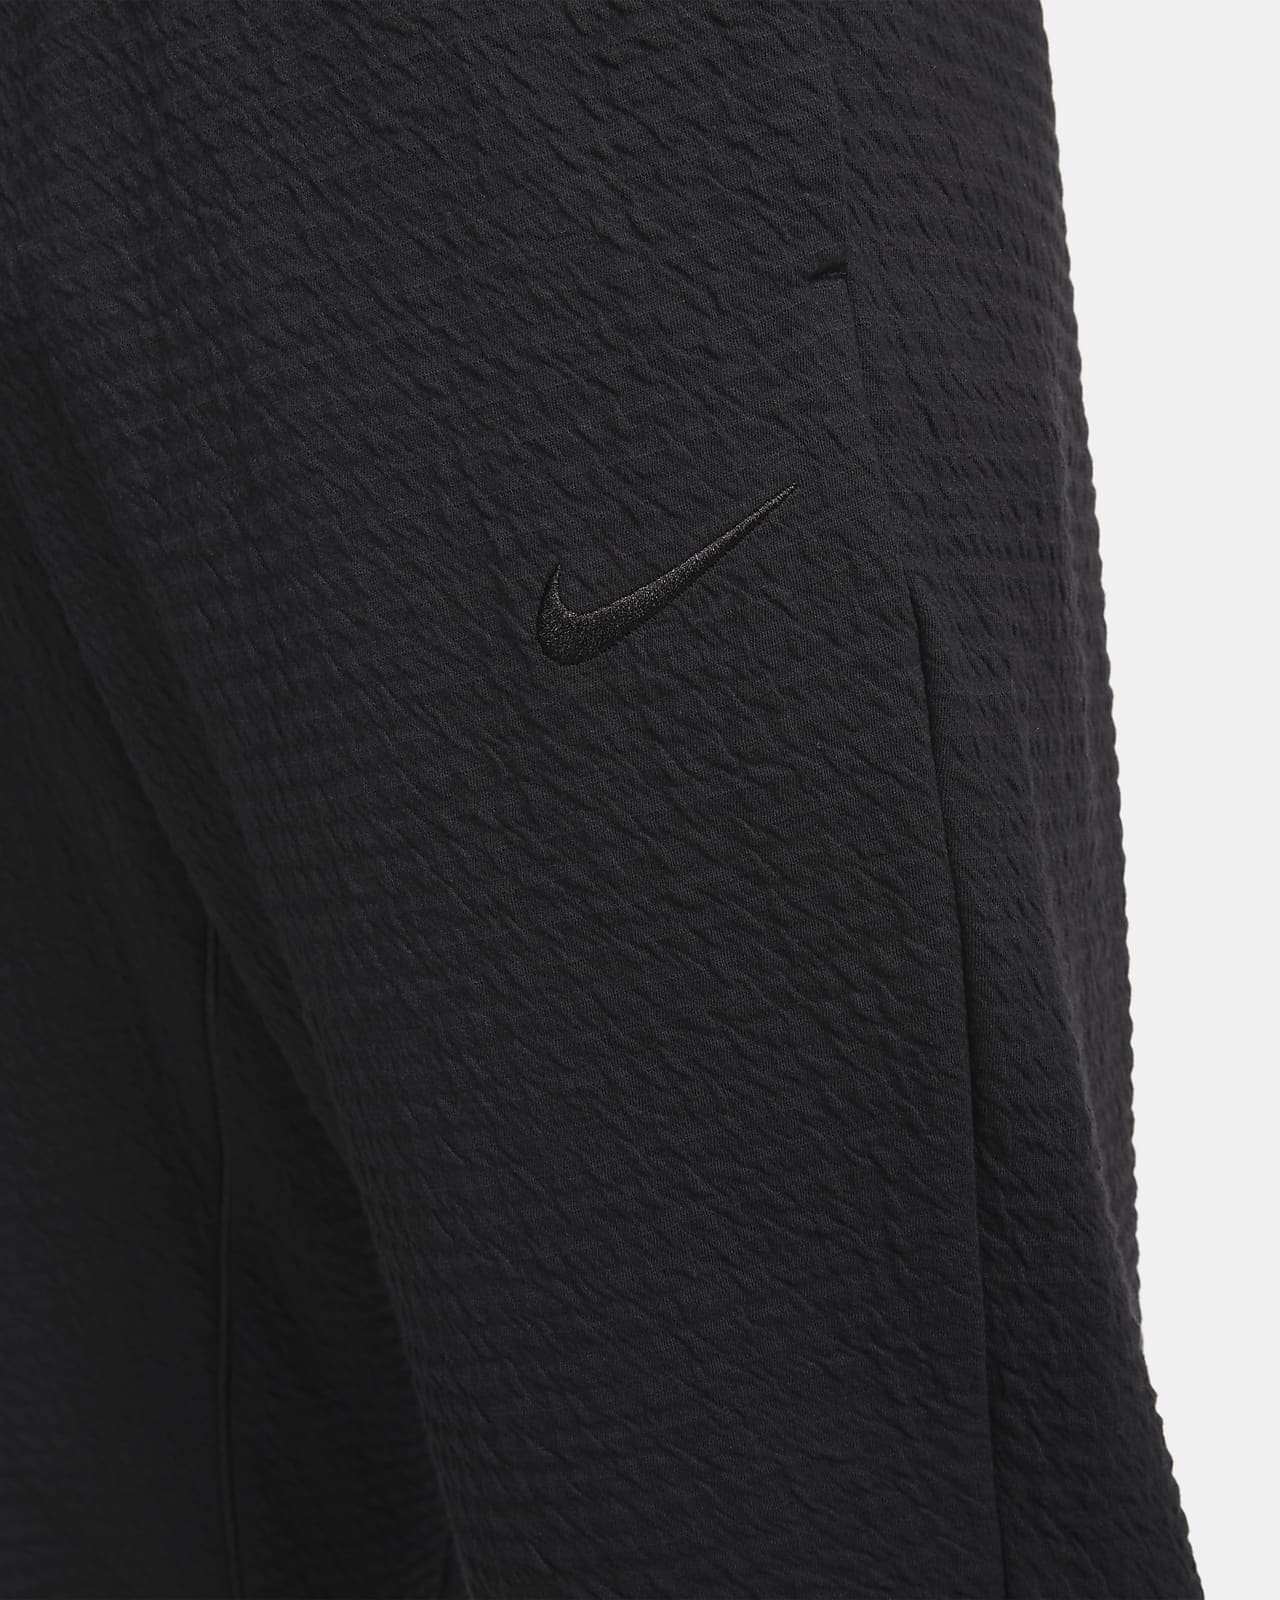 Nike Dri-FIT Yoga Pants Black Men's Size XL DV9885-010 NWT MSRP